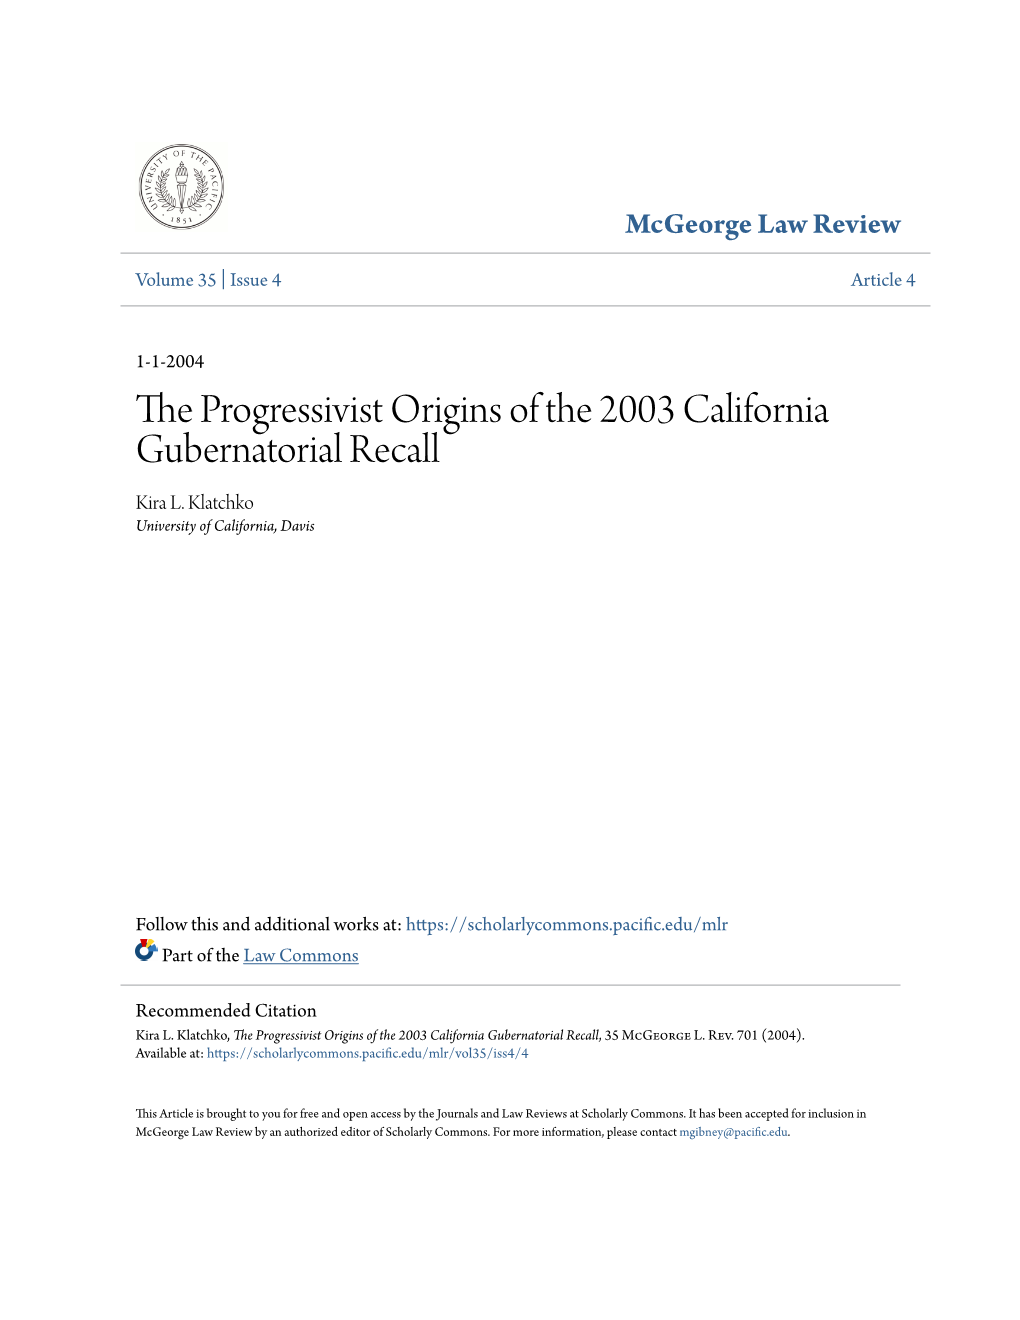 The Progressivist Origins of the 2003 California Gubernatorial Recall, 35 Mcgeorge L